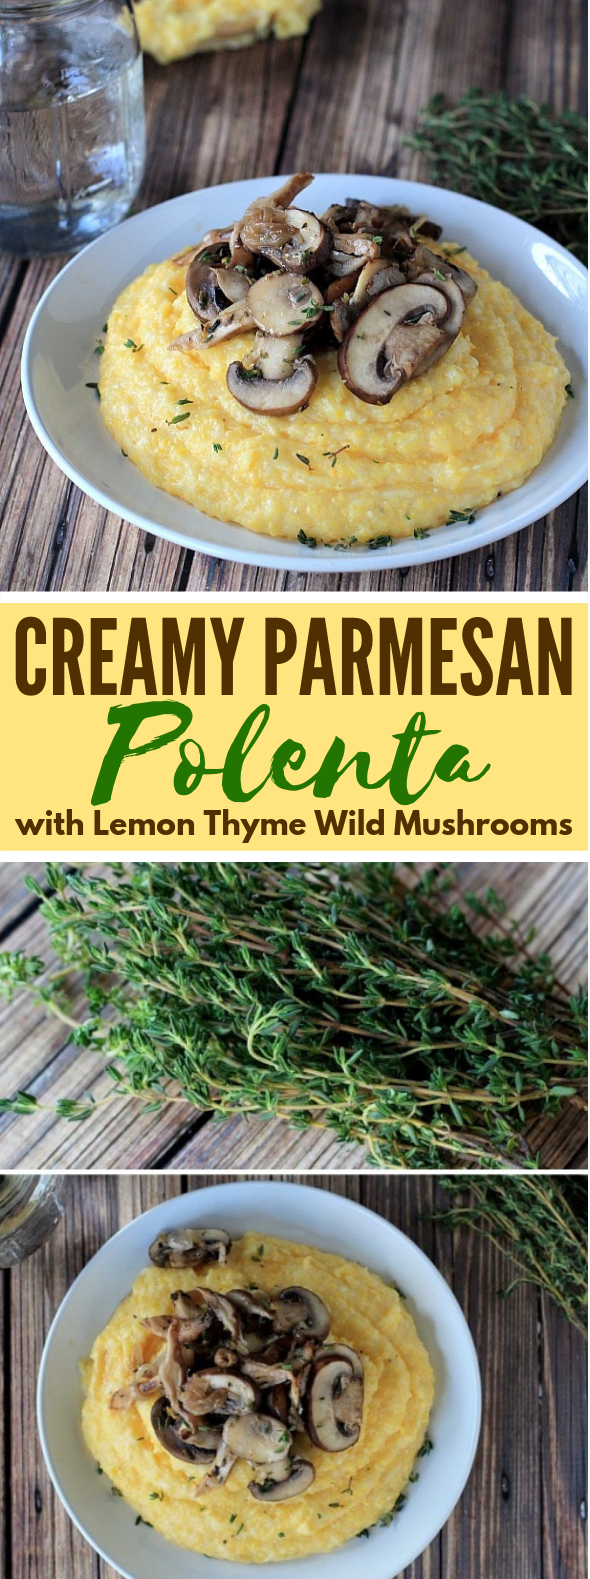 Parmesan Polenta with Lemon Thyme Wild Mushrooms #vegetarian #glutenfree